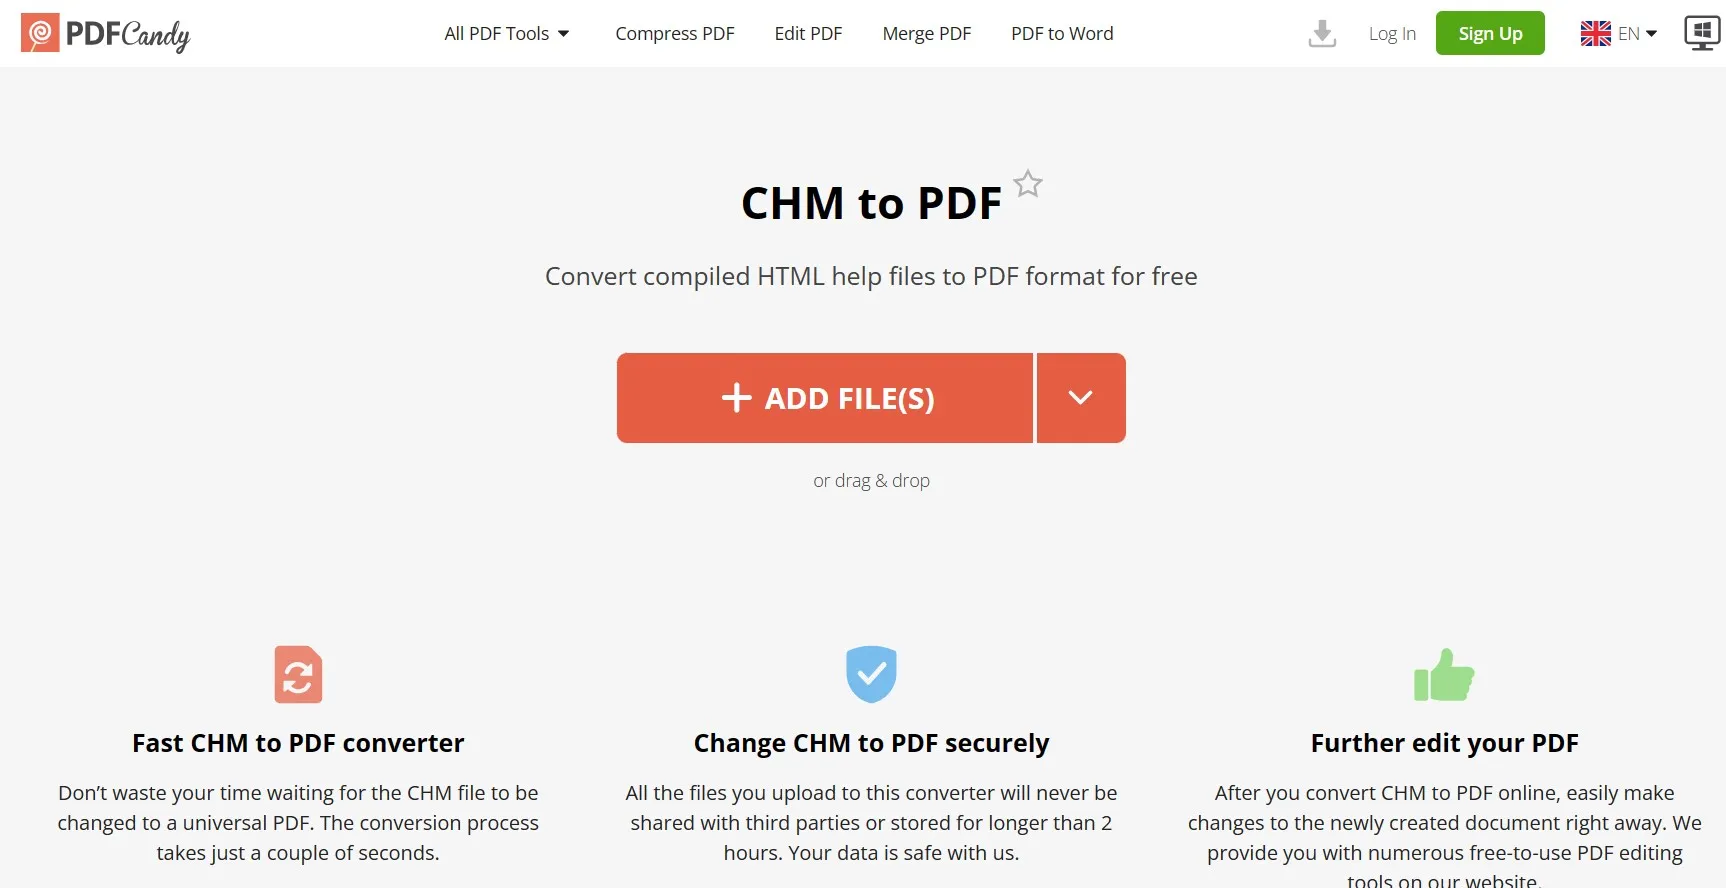 chm to pdf pdfcandy add file